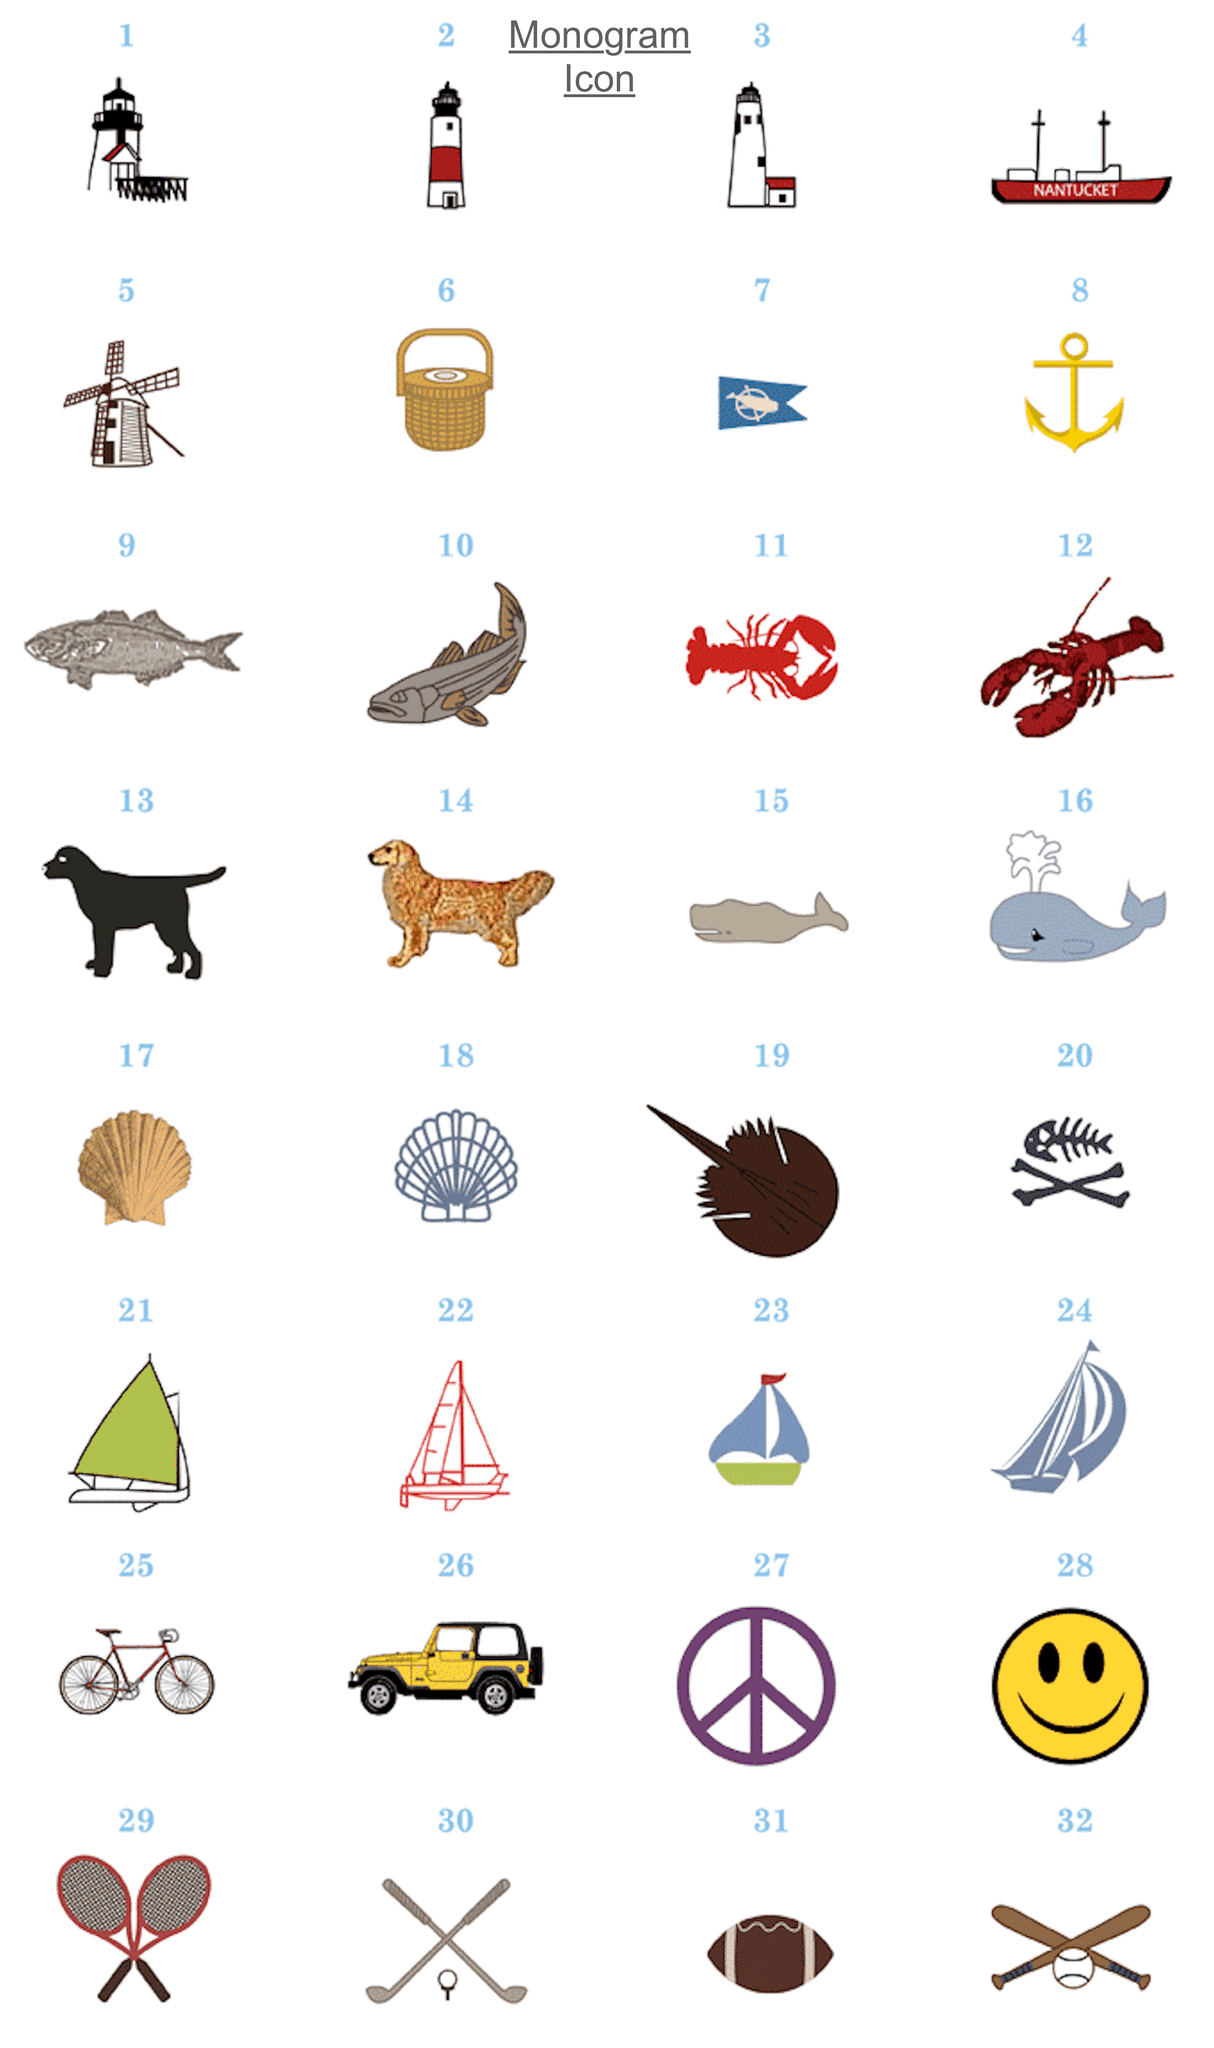 Boat-N-Tote – Nantucket Monogram & Design by Brooke Boothe